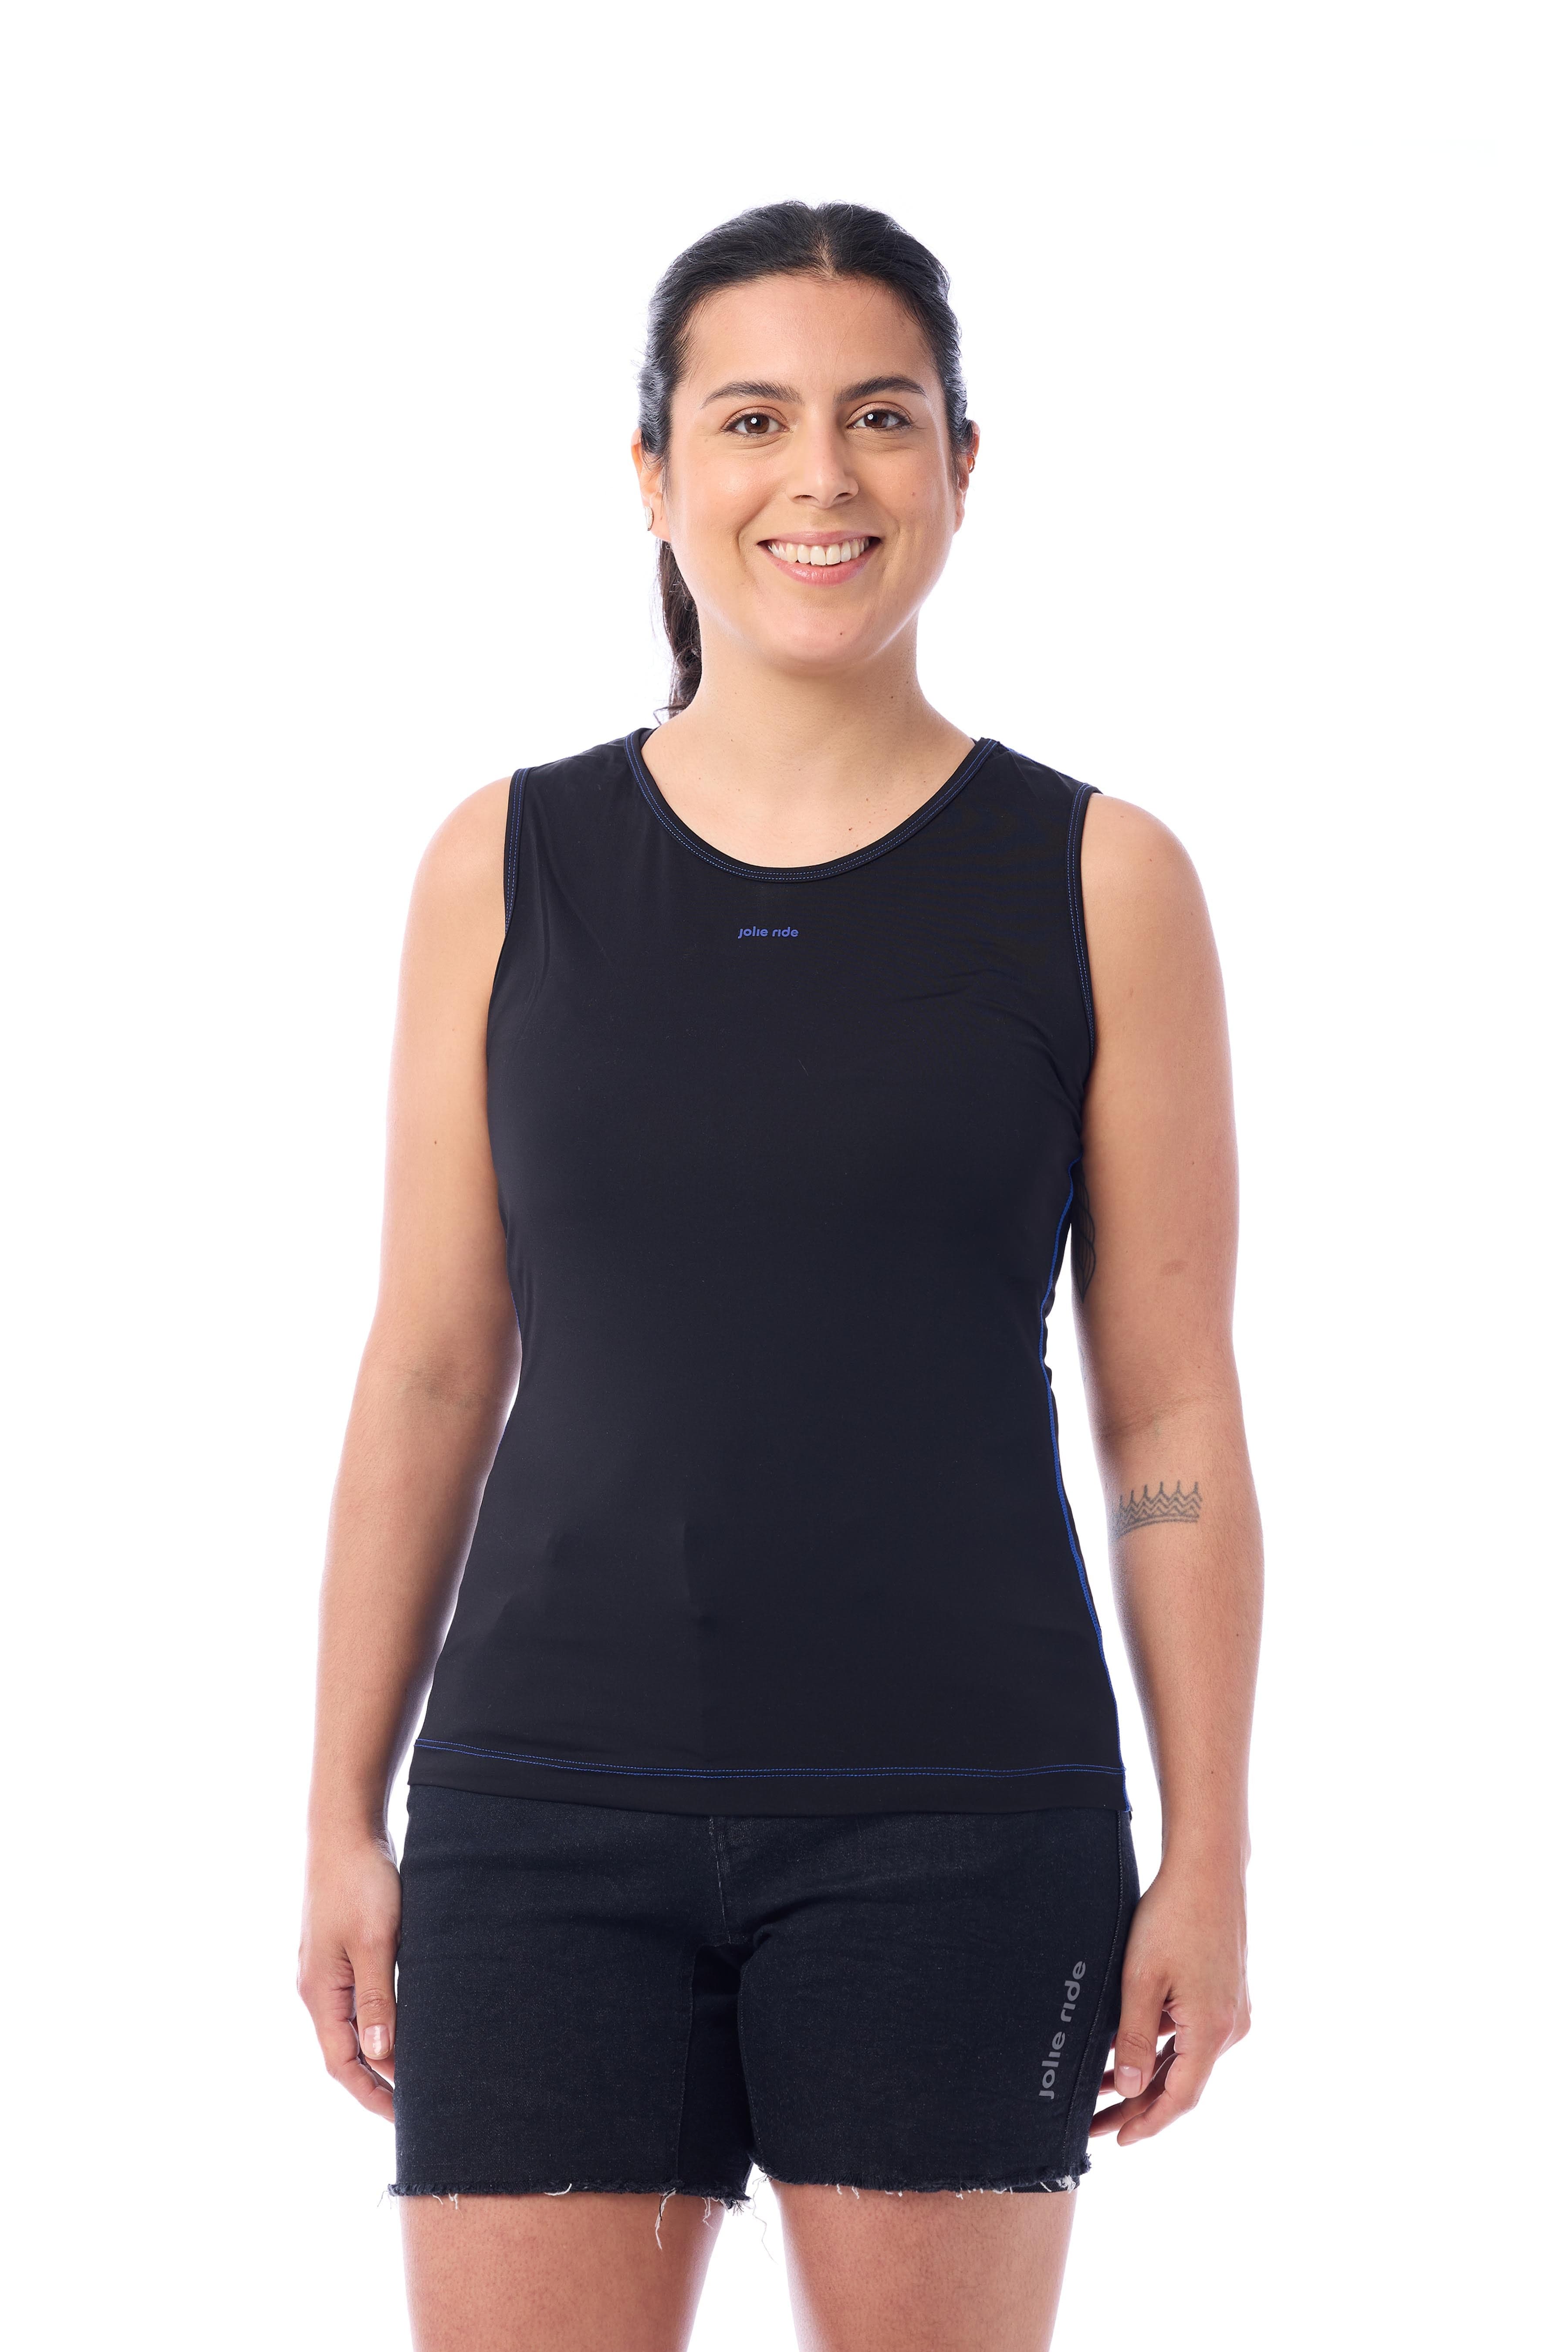 JolieRide base layers Black / XS sleeveless base layer for women | moisture-wicking & temperature regulation